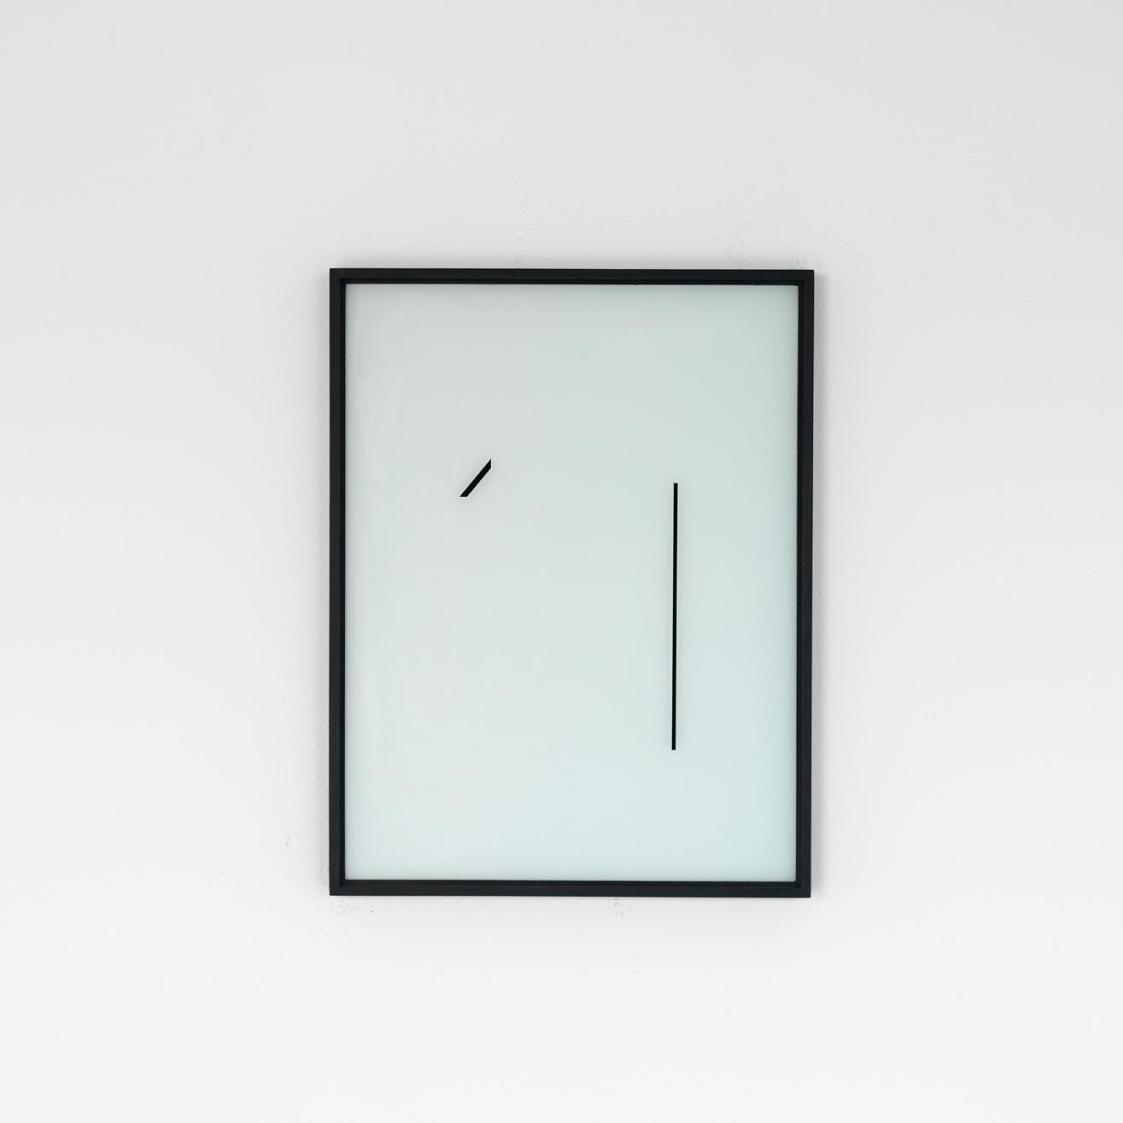 Florian Pumhösl, Aushang (Nr. 4), 2007, Acryllack hinter Glas, 42,5 x 32,5 cm, Belvedere, Wien, ...